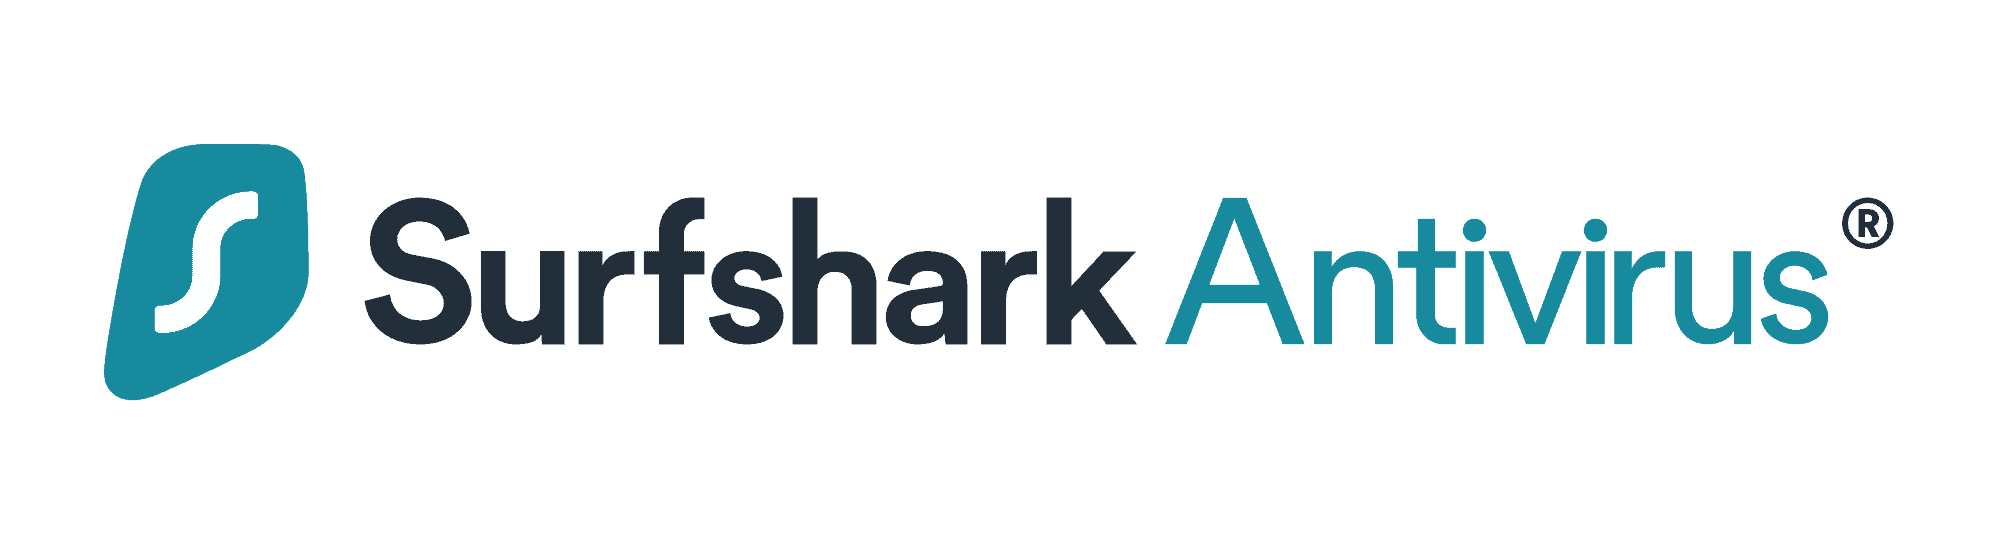 Surfshark Antivirus logo